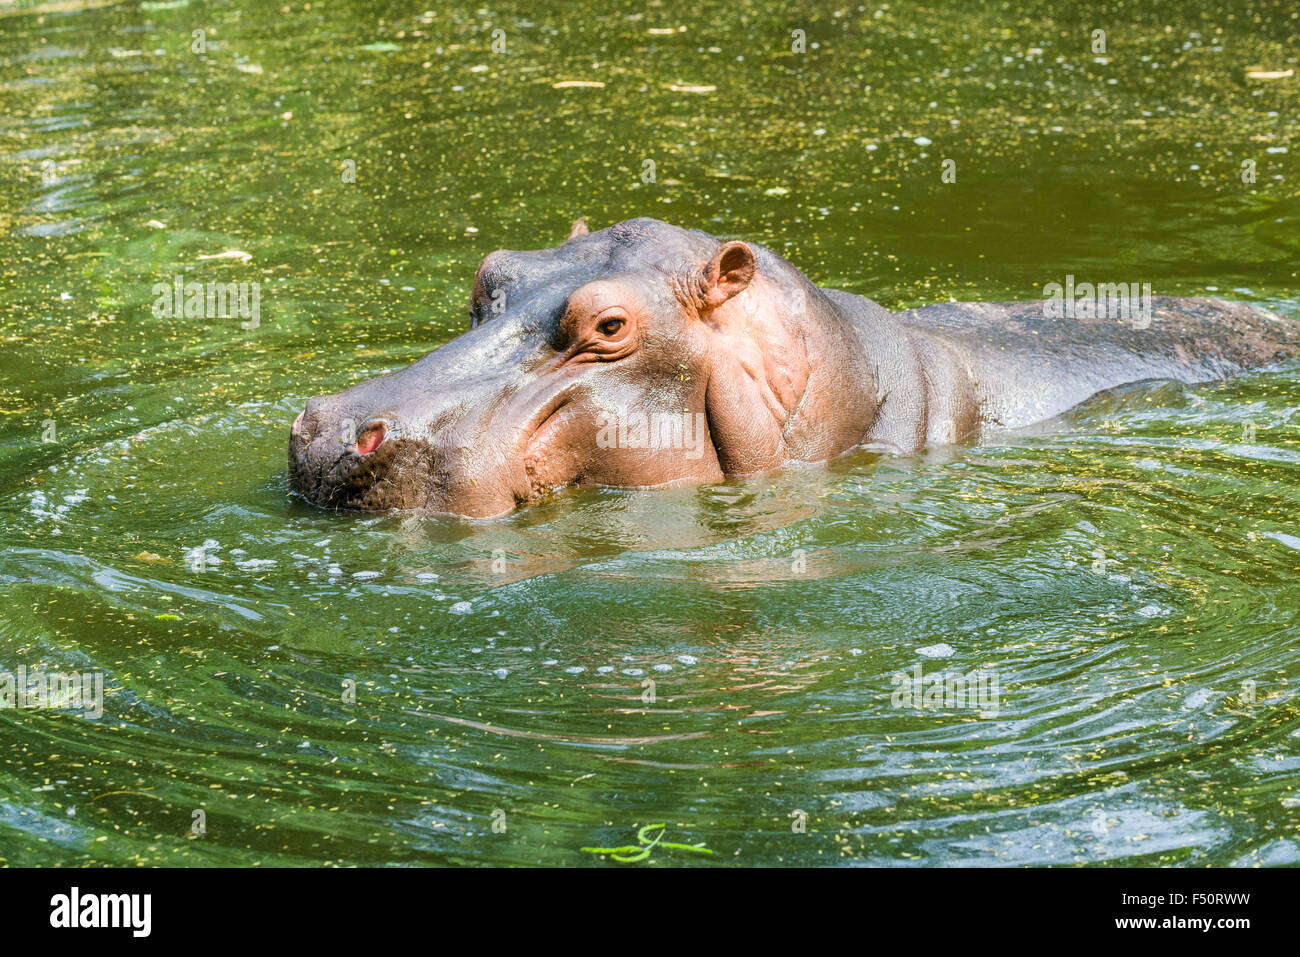 A Hippopotamus (Hippopotamus amphibius) is swimming in the water in the zoo Stock Photo